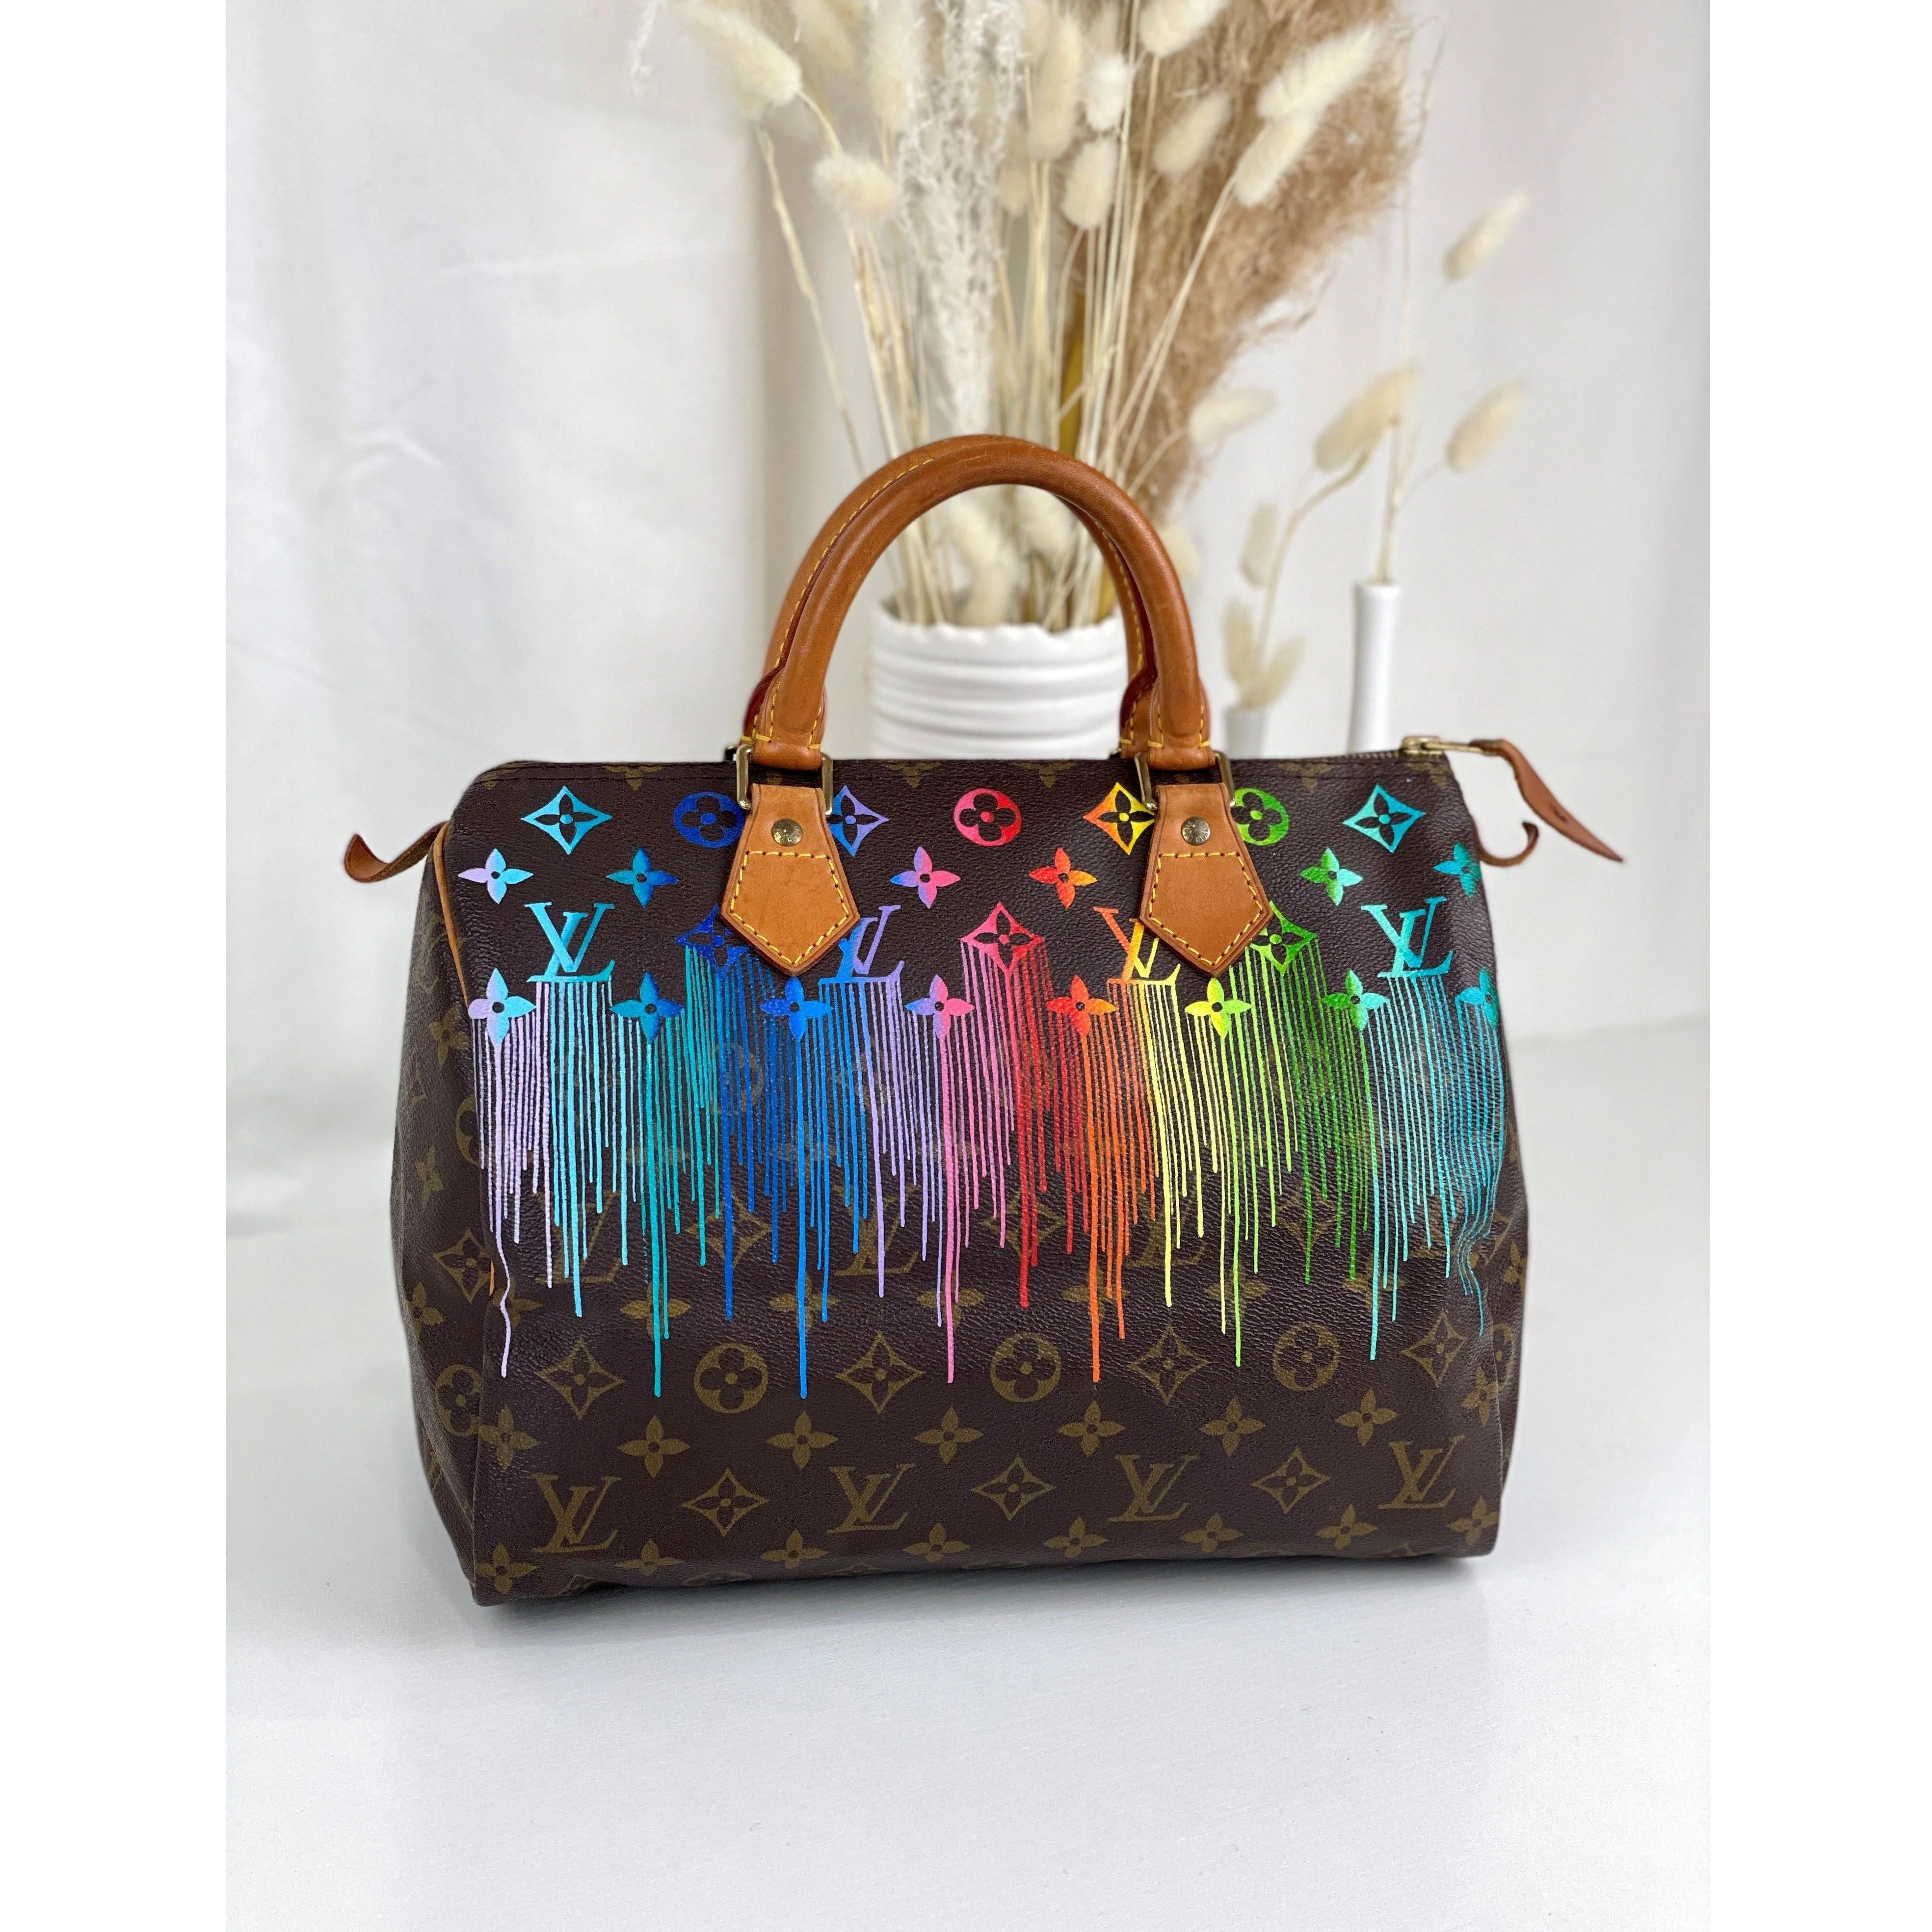 Customized Louis Vuitton Speedy 30 - "Rainbow Reflection" Artwork | New Vintage Handbags